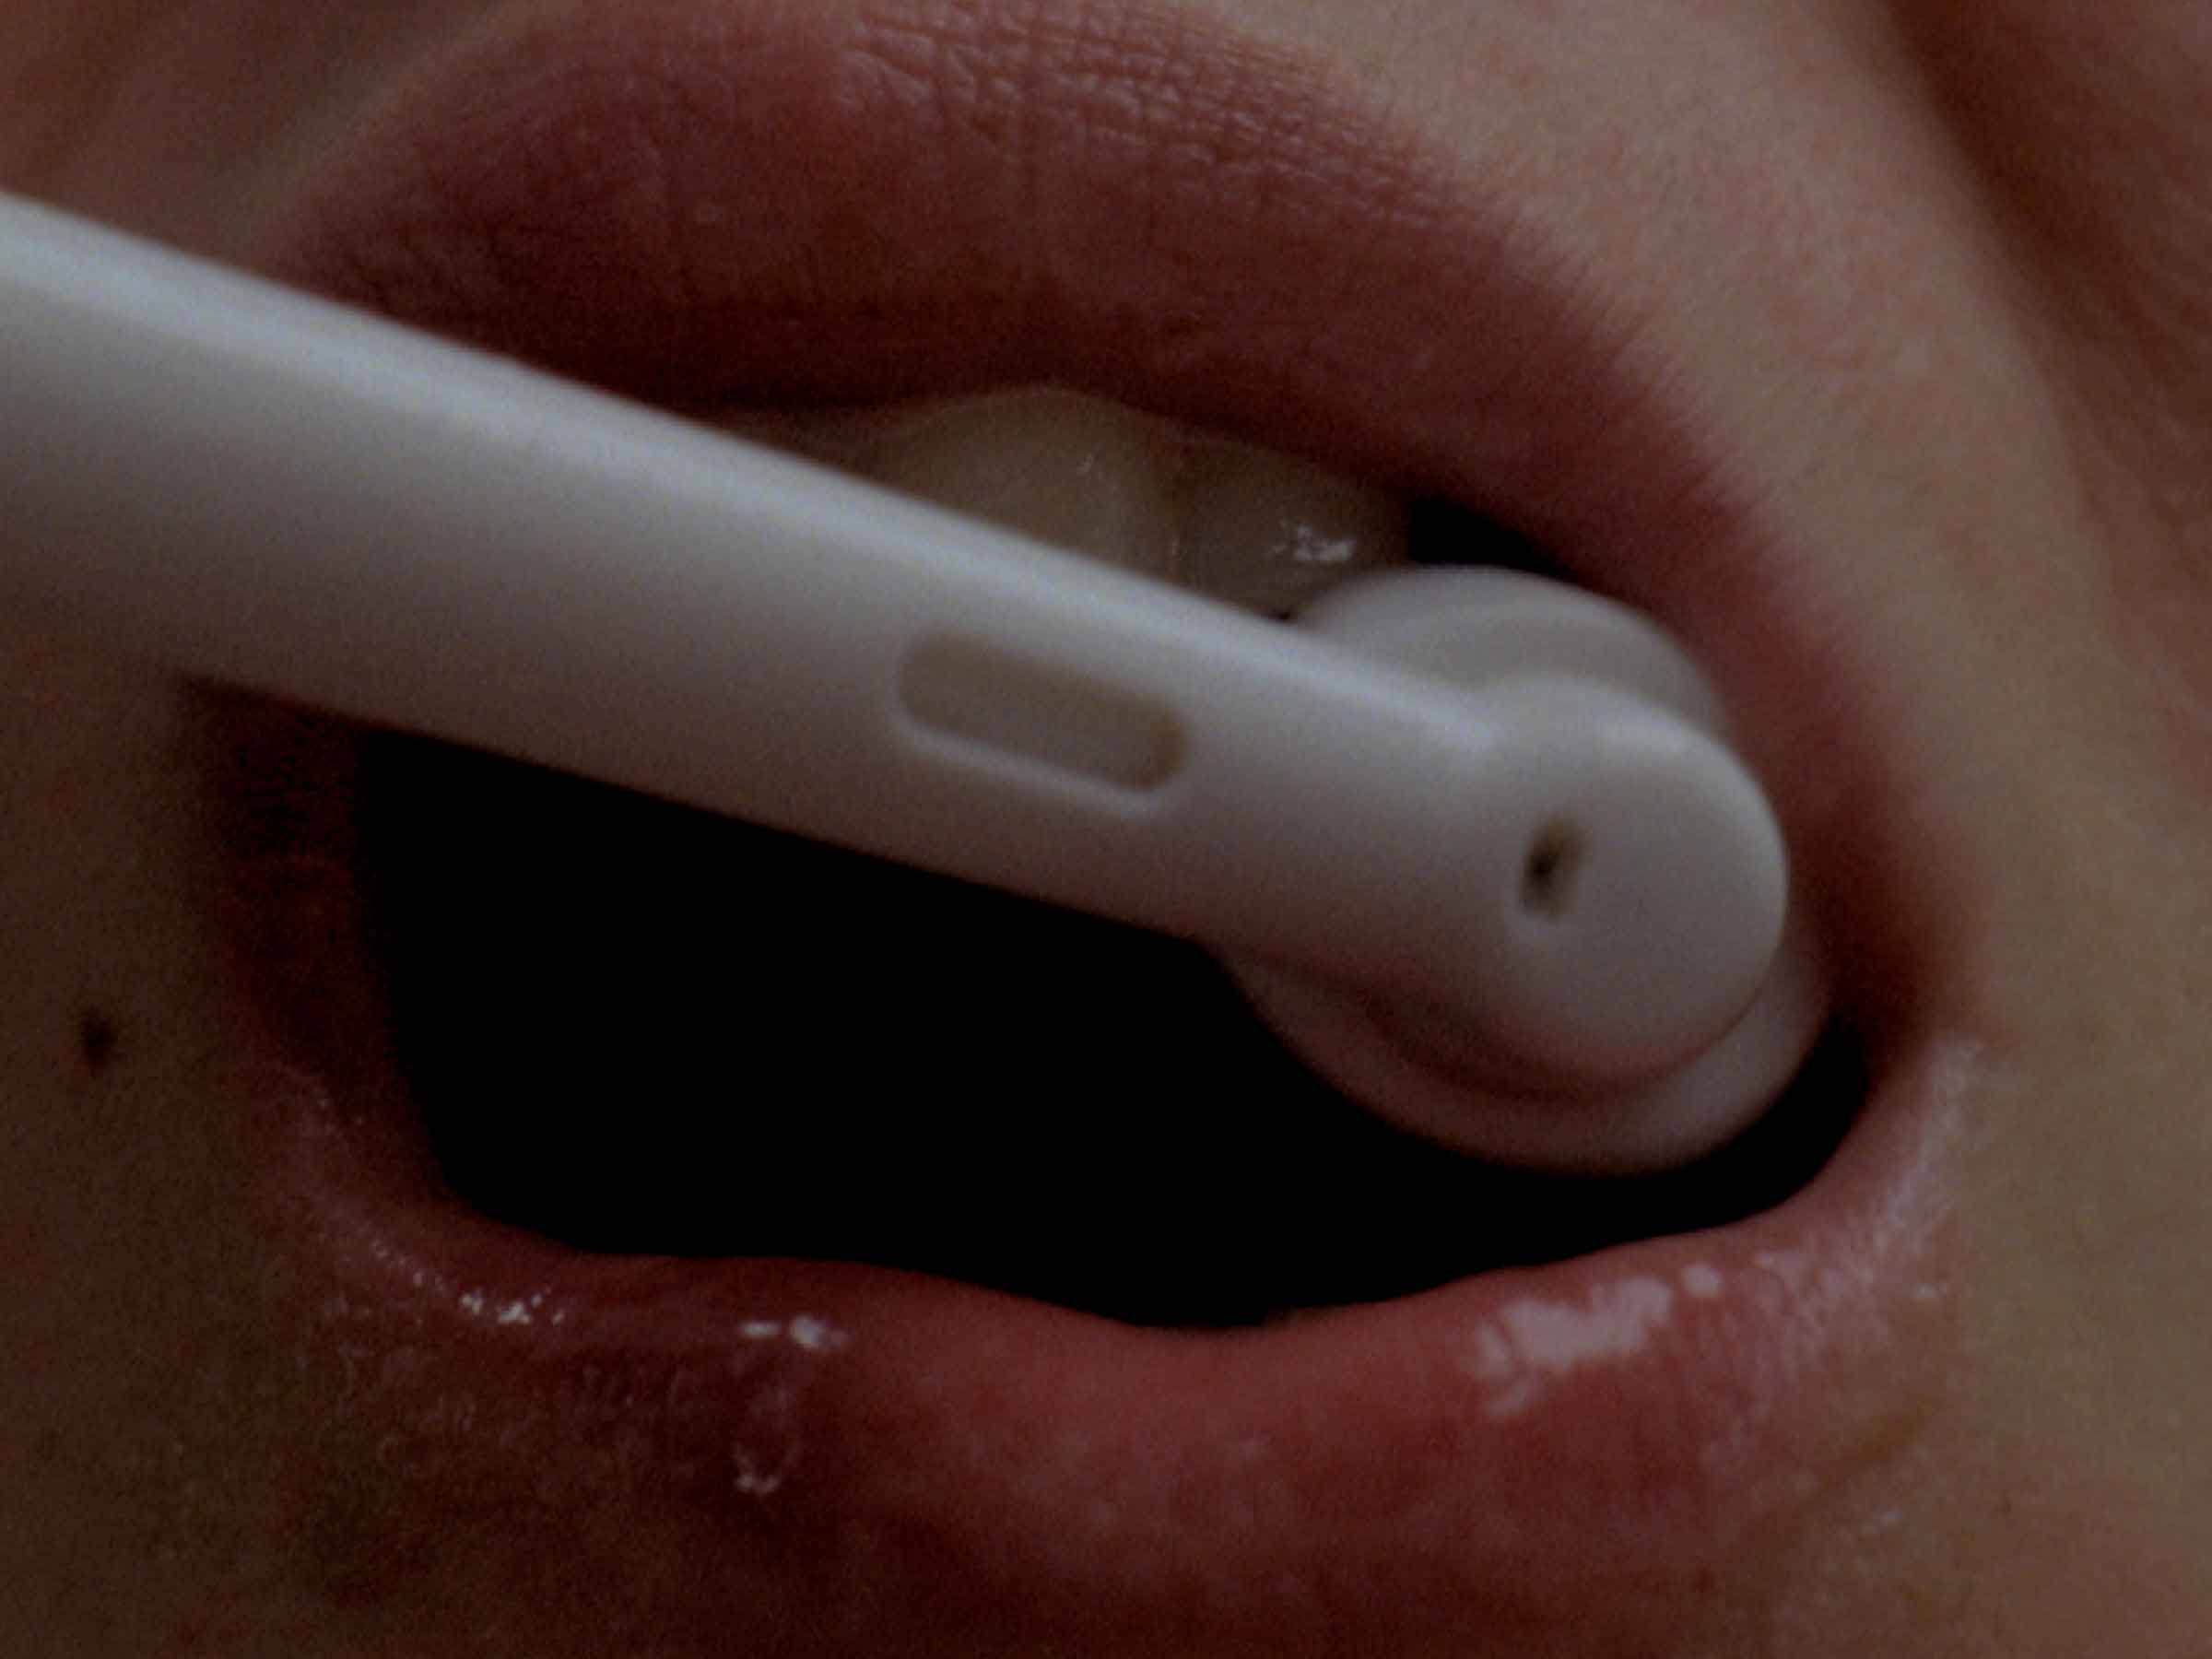 film still: woman brushing her teeth